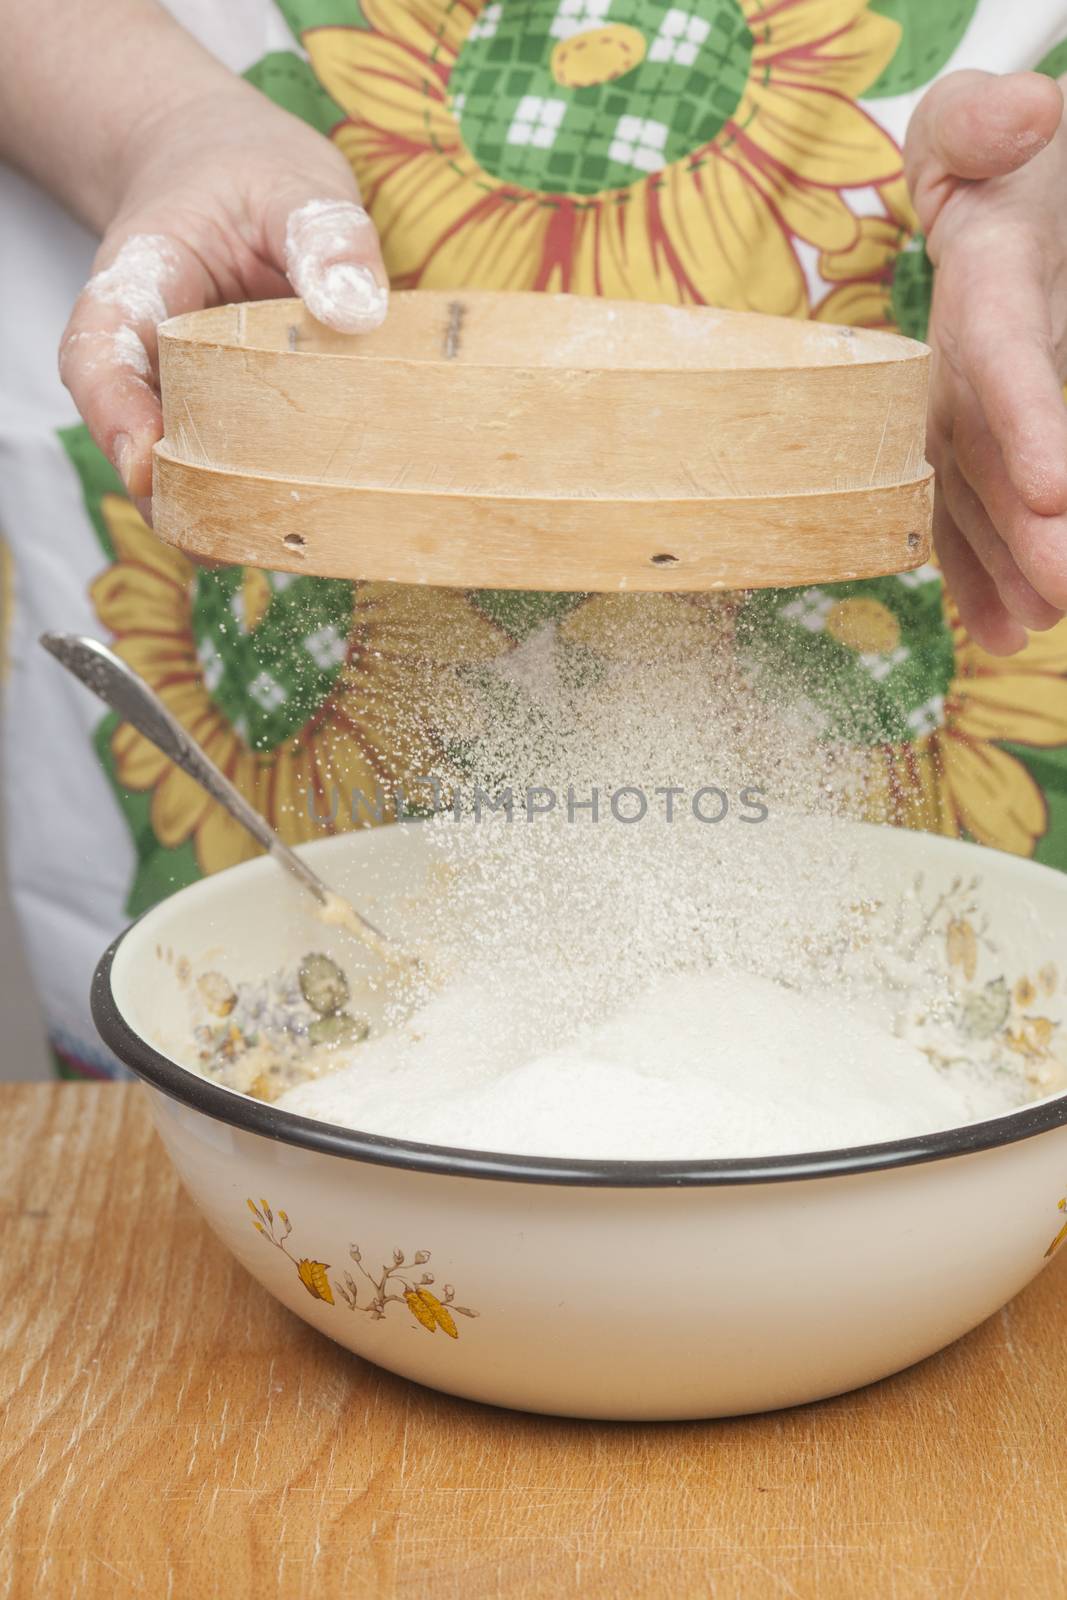 Women's hands prepairing flour before baking pie by kozak